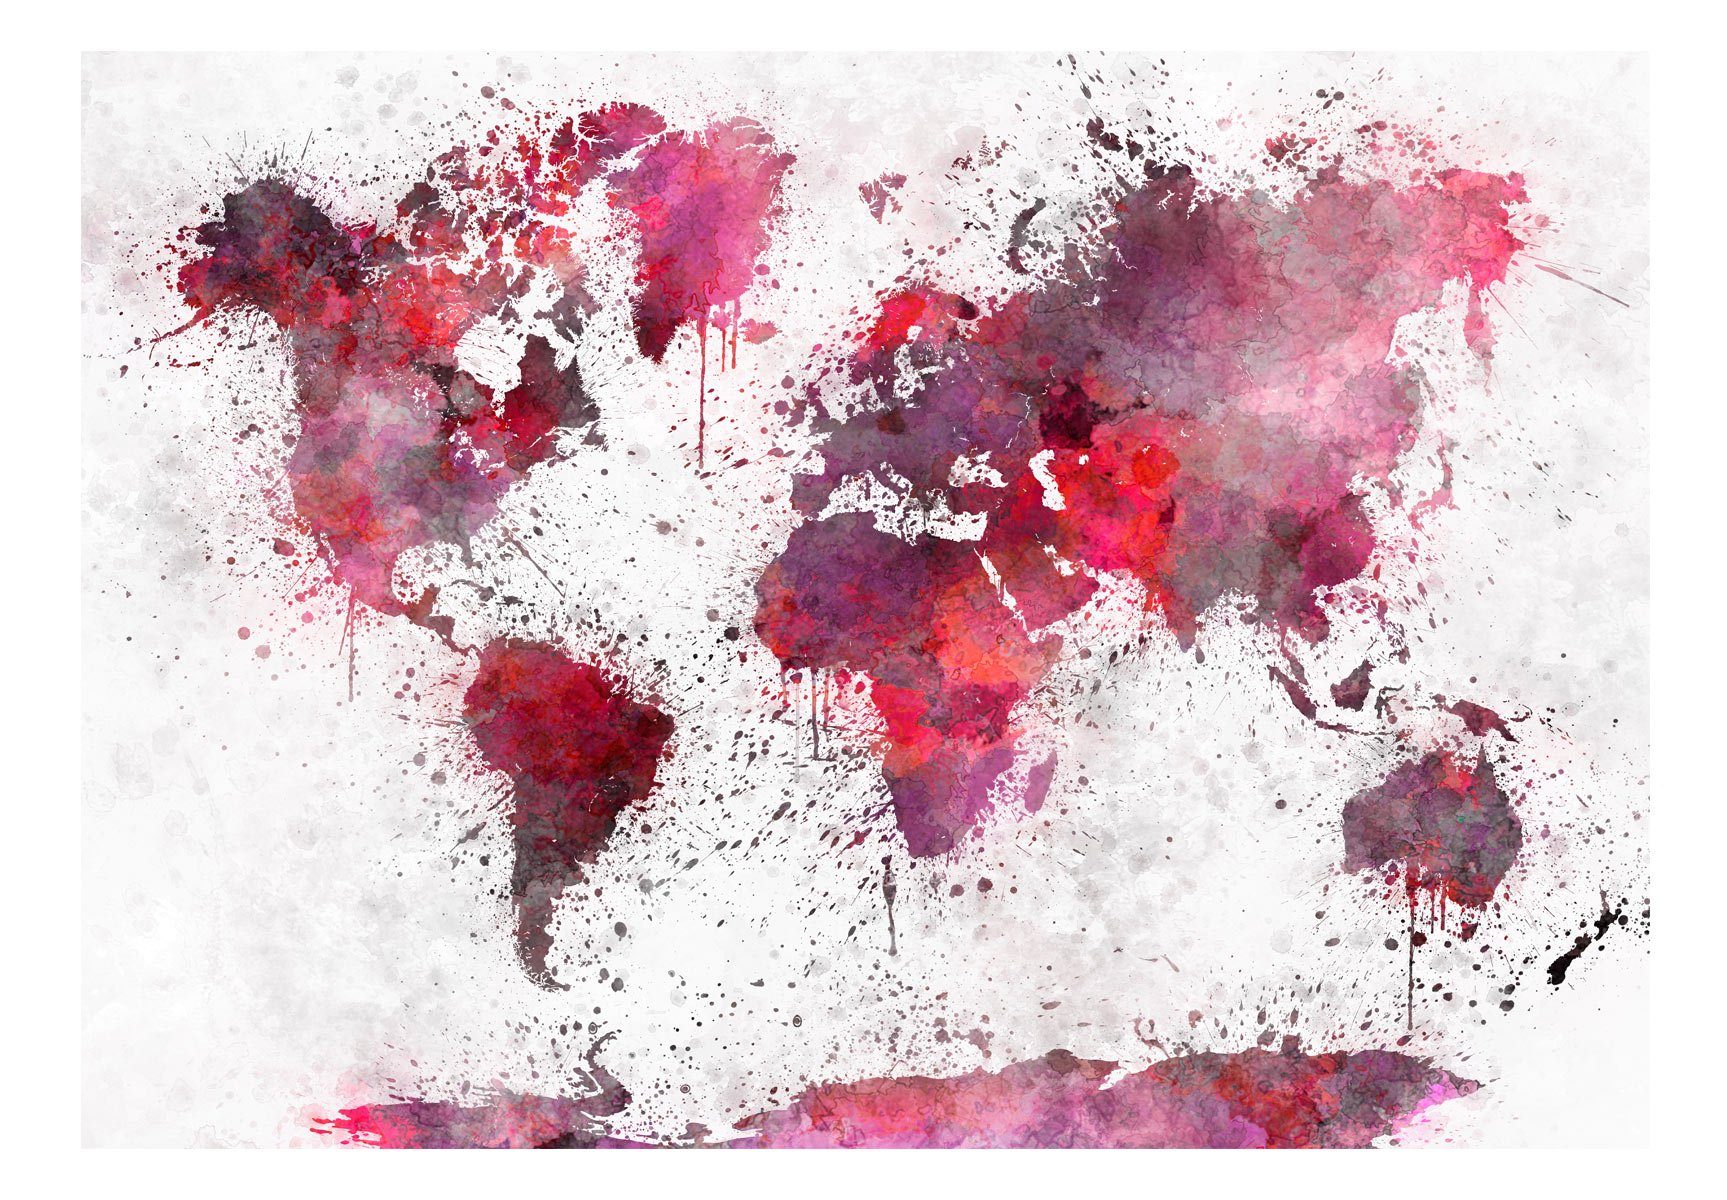 KUNSTLOFT Vliestapete World Map: m, lichtbeständige halb-matt, 0.98x0.7 Tapete Design Watercolors matt, Red